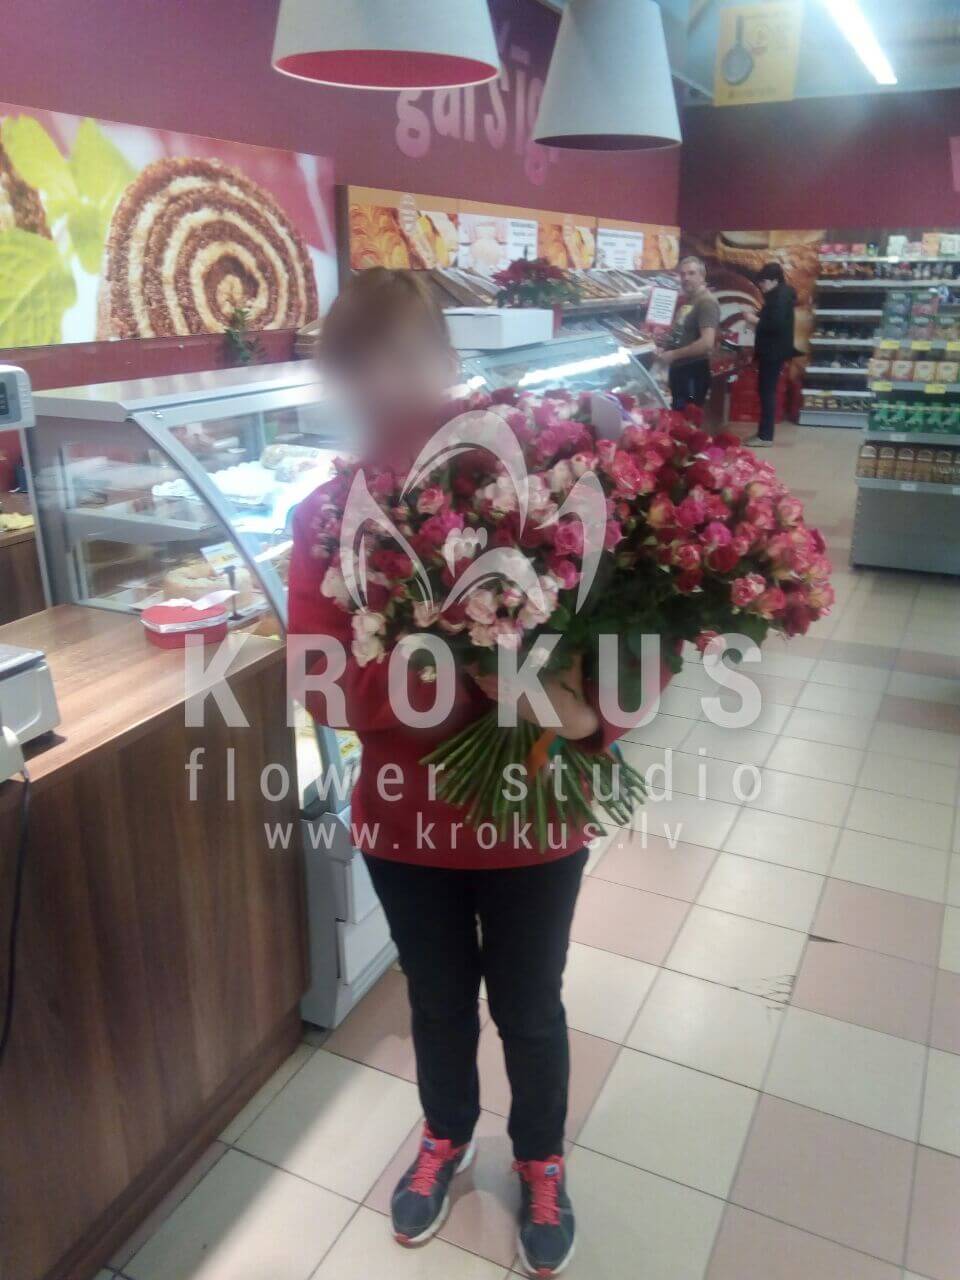 Deliver flowers to Latvia (shrub roses)